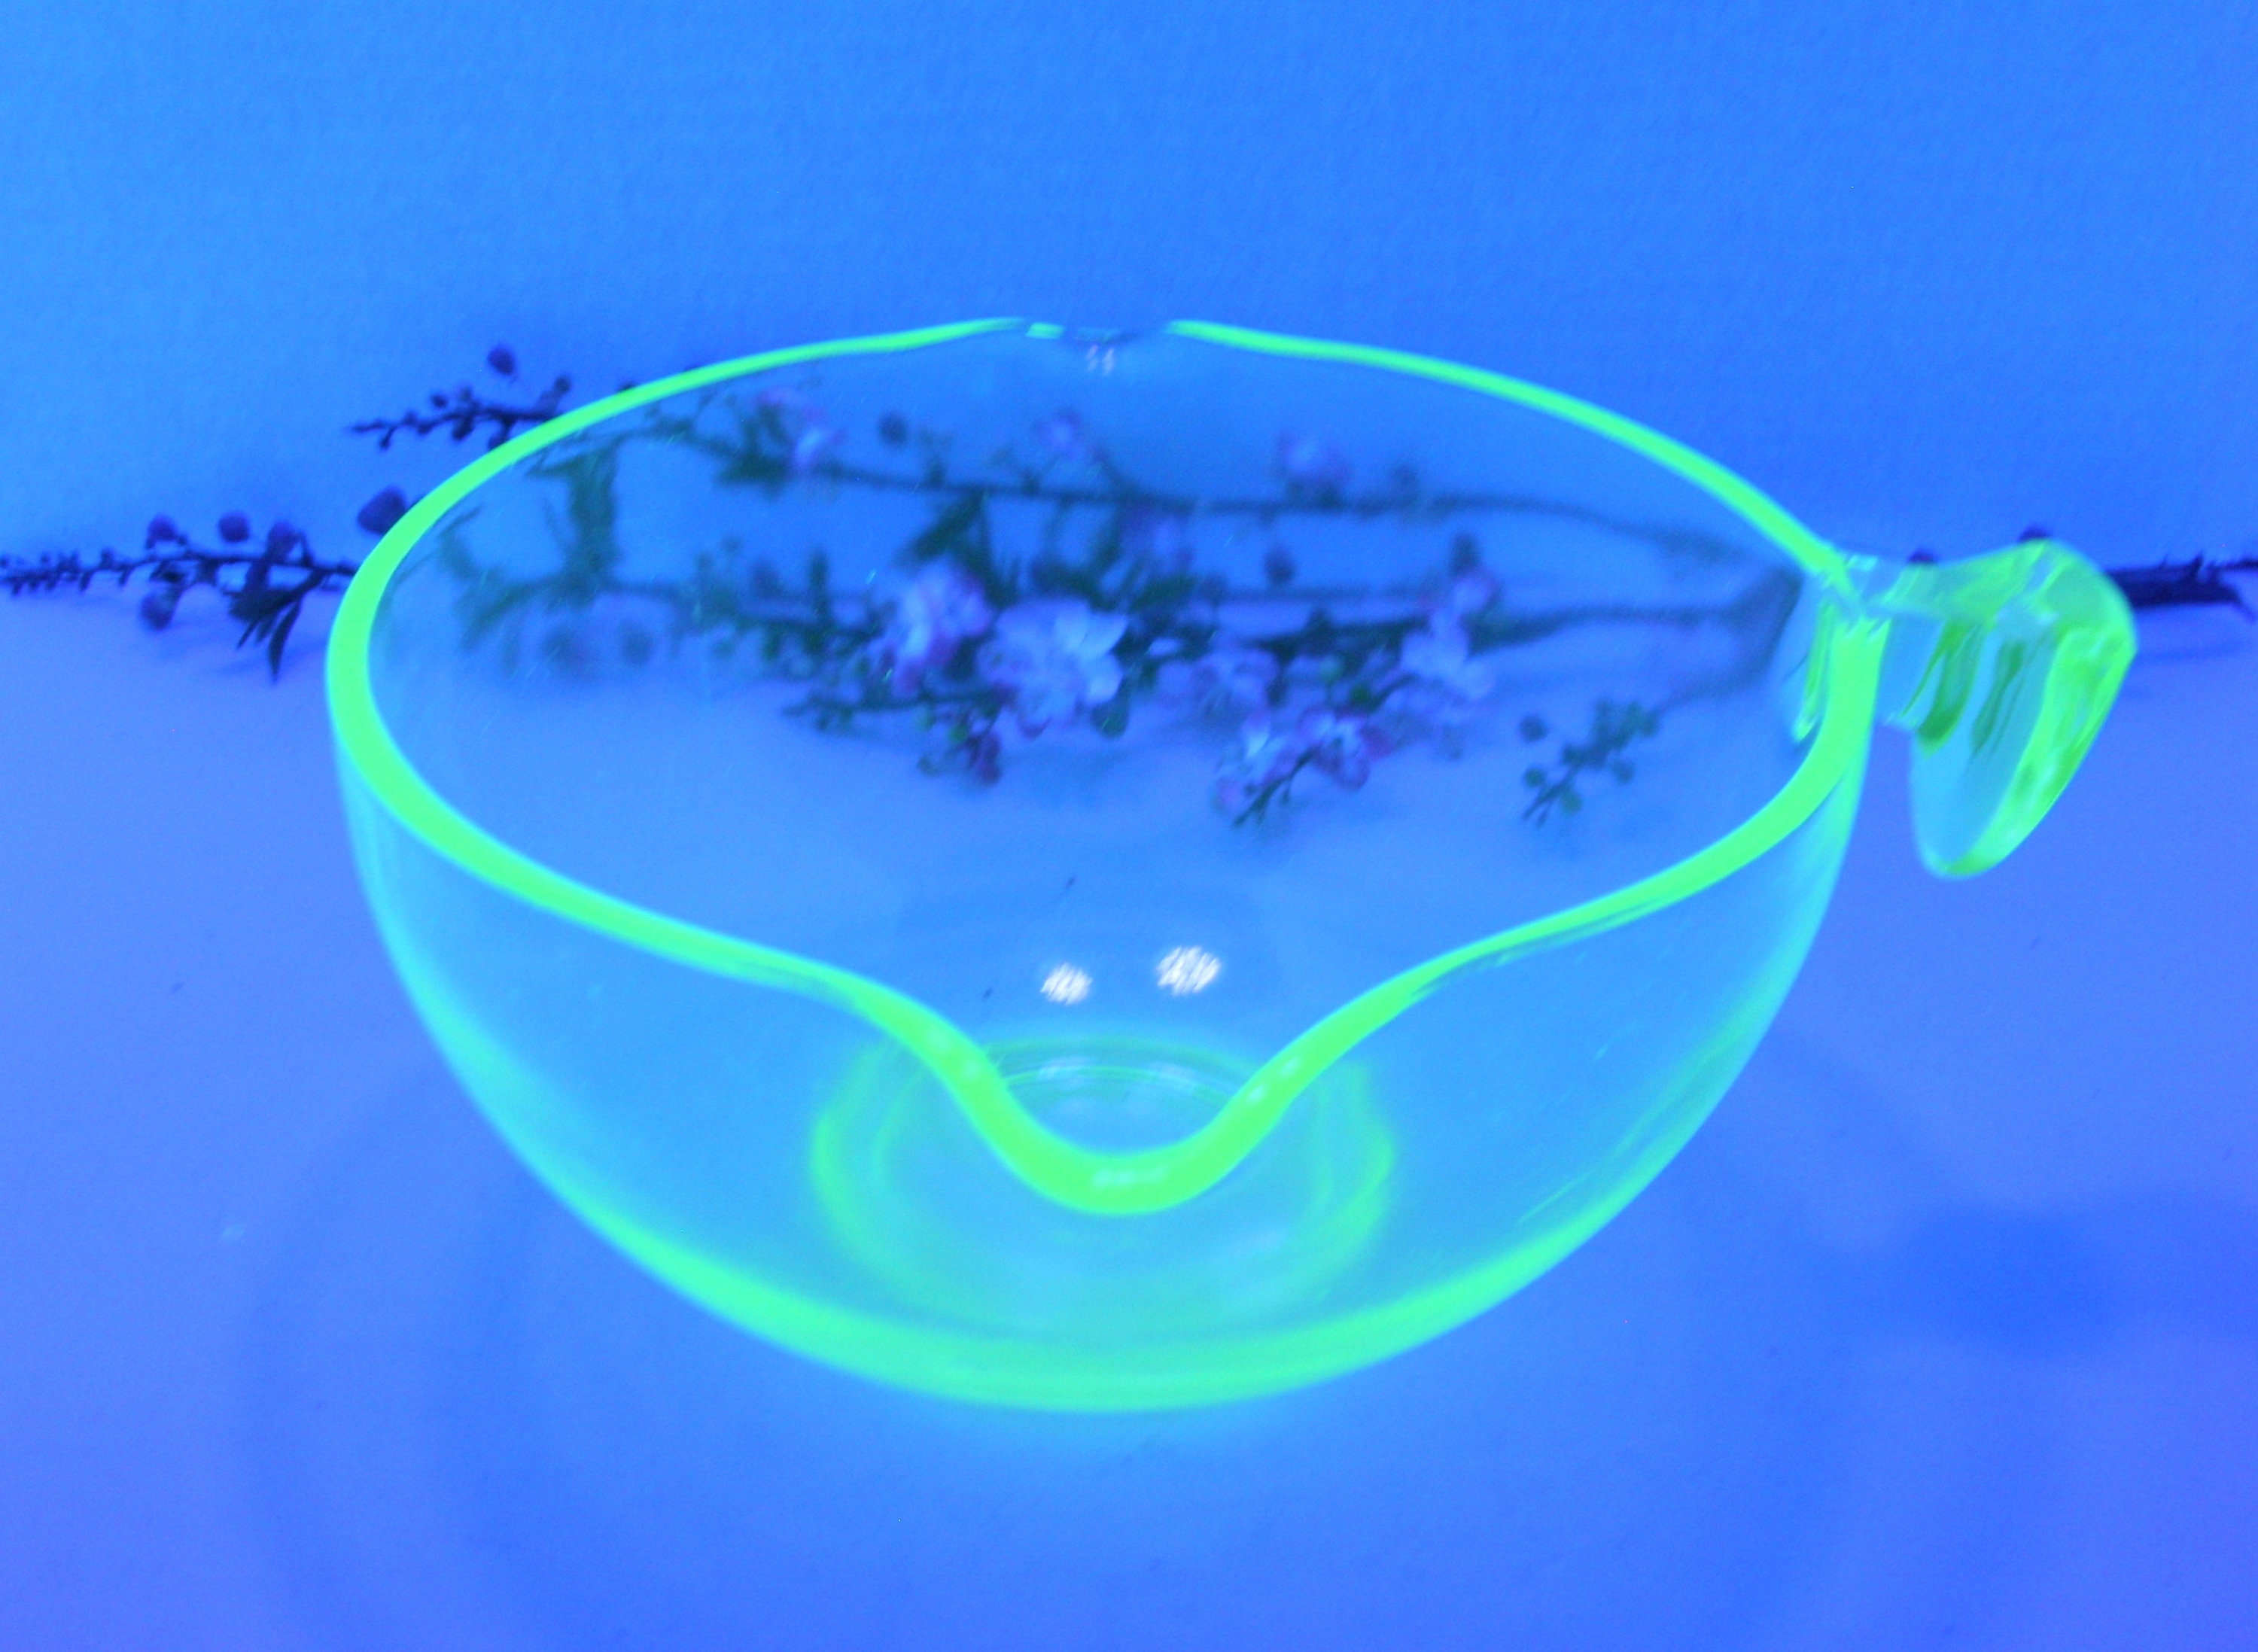 D & B Co Green Uranium Depression Glass 4 Cup Mixing Bowl